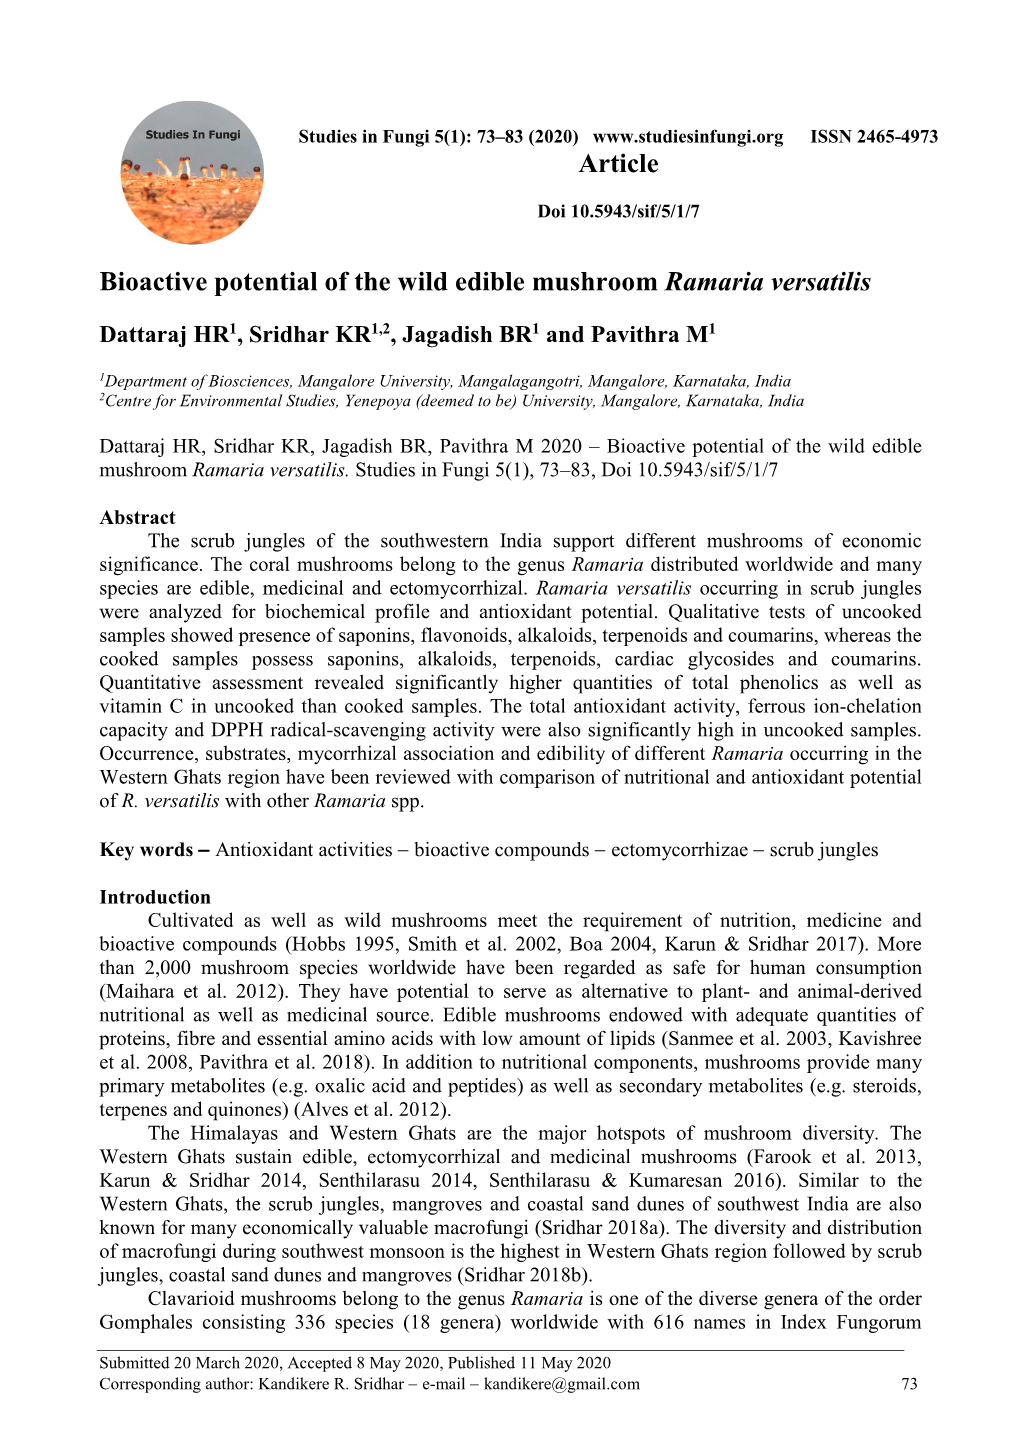 Bioactive Potential of the Wild Edible Mushroom Ramaria Versatilis Article